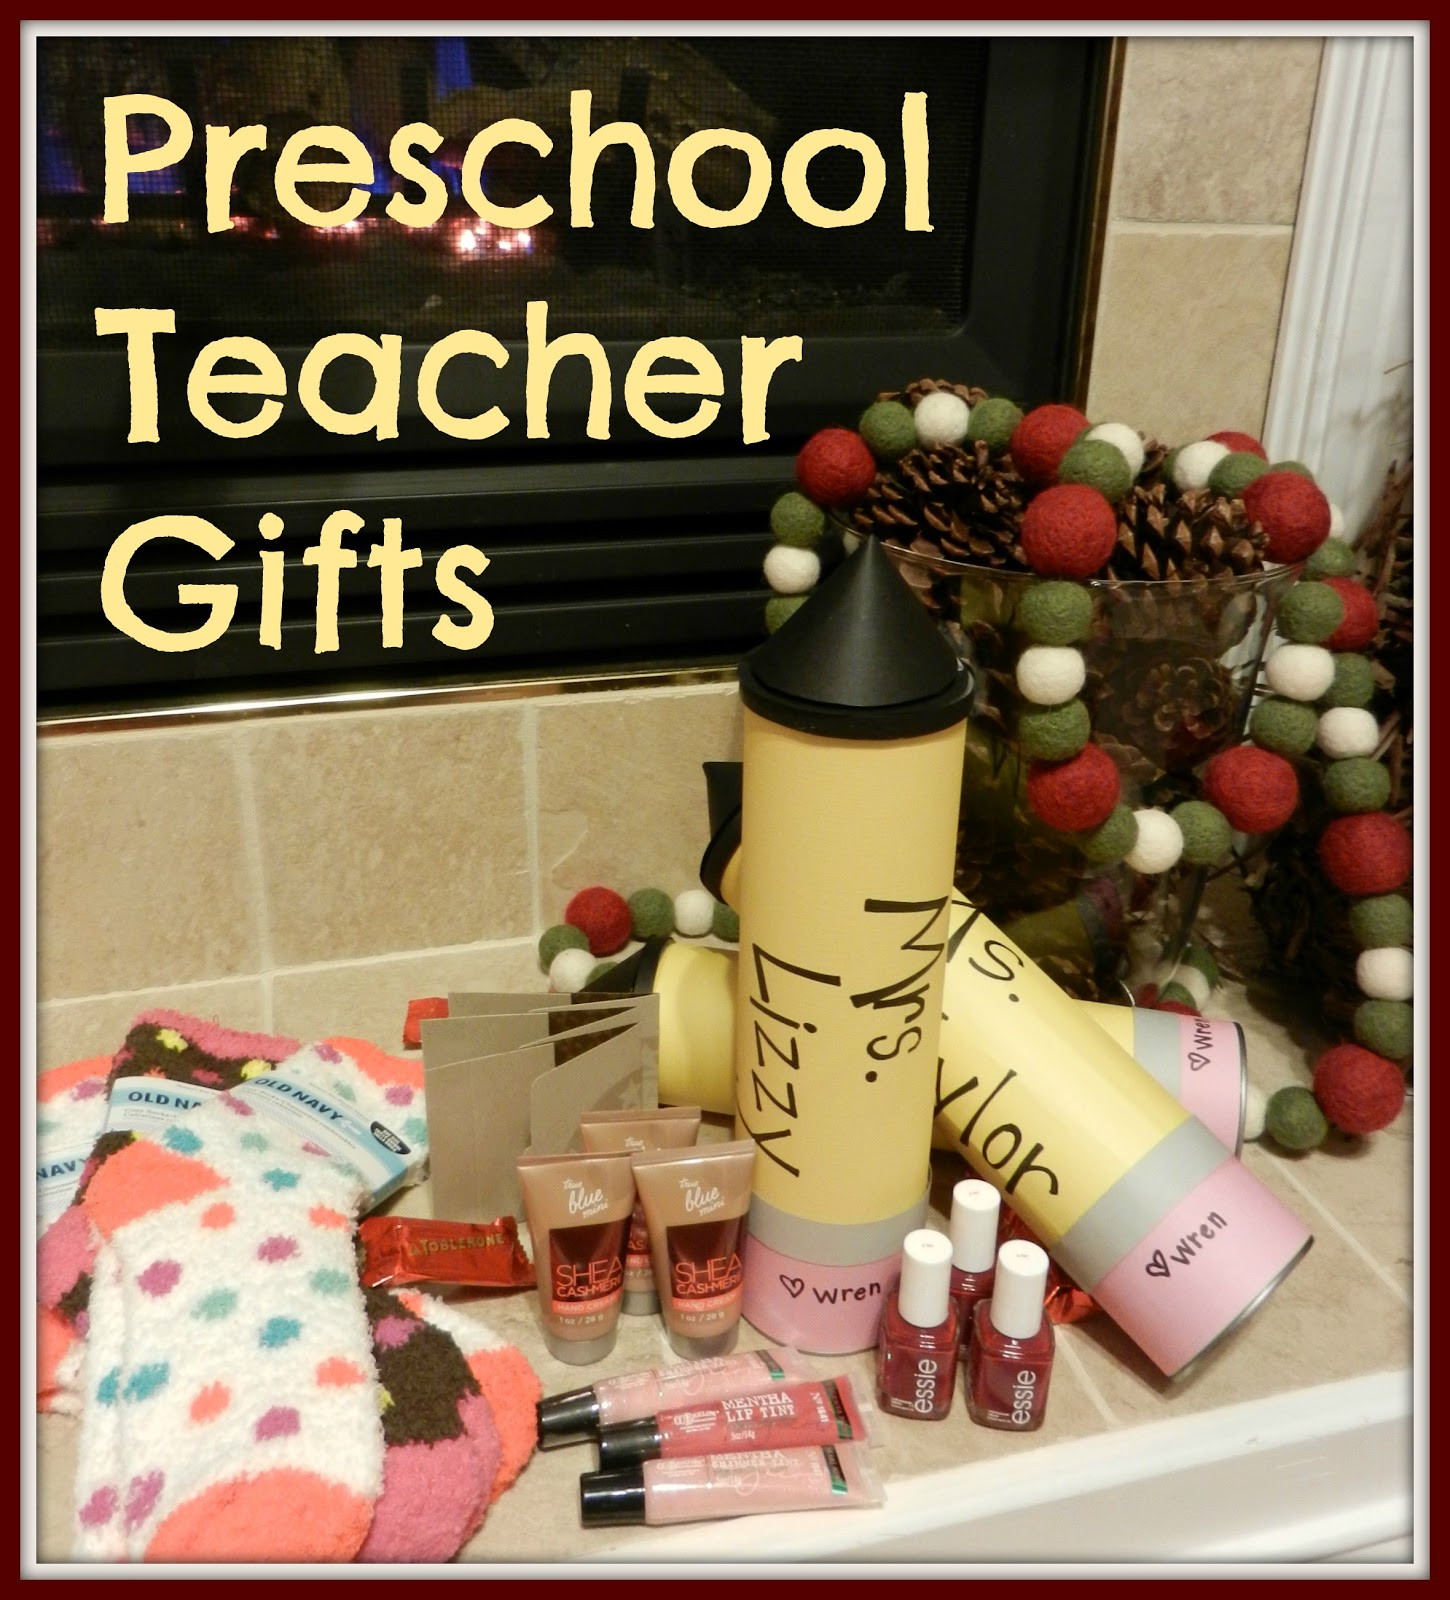 Preschool Teacher Holiday Gift Ideas
 chrismas t card for preschool teacher 2012